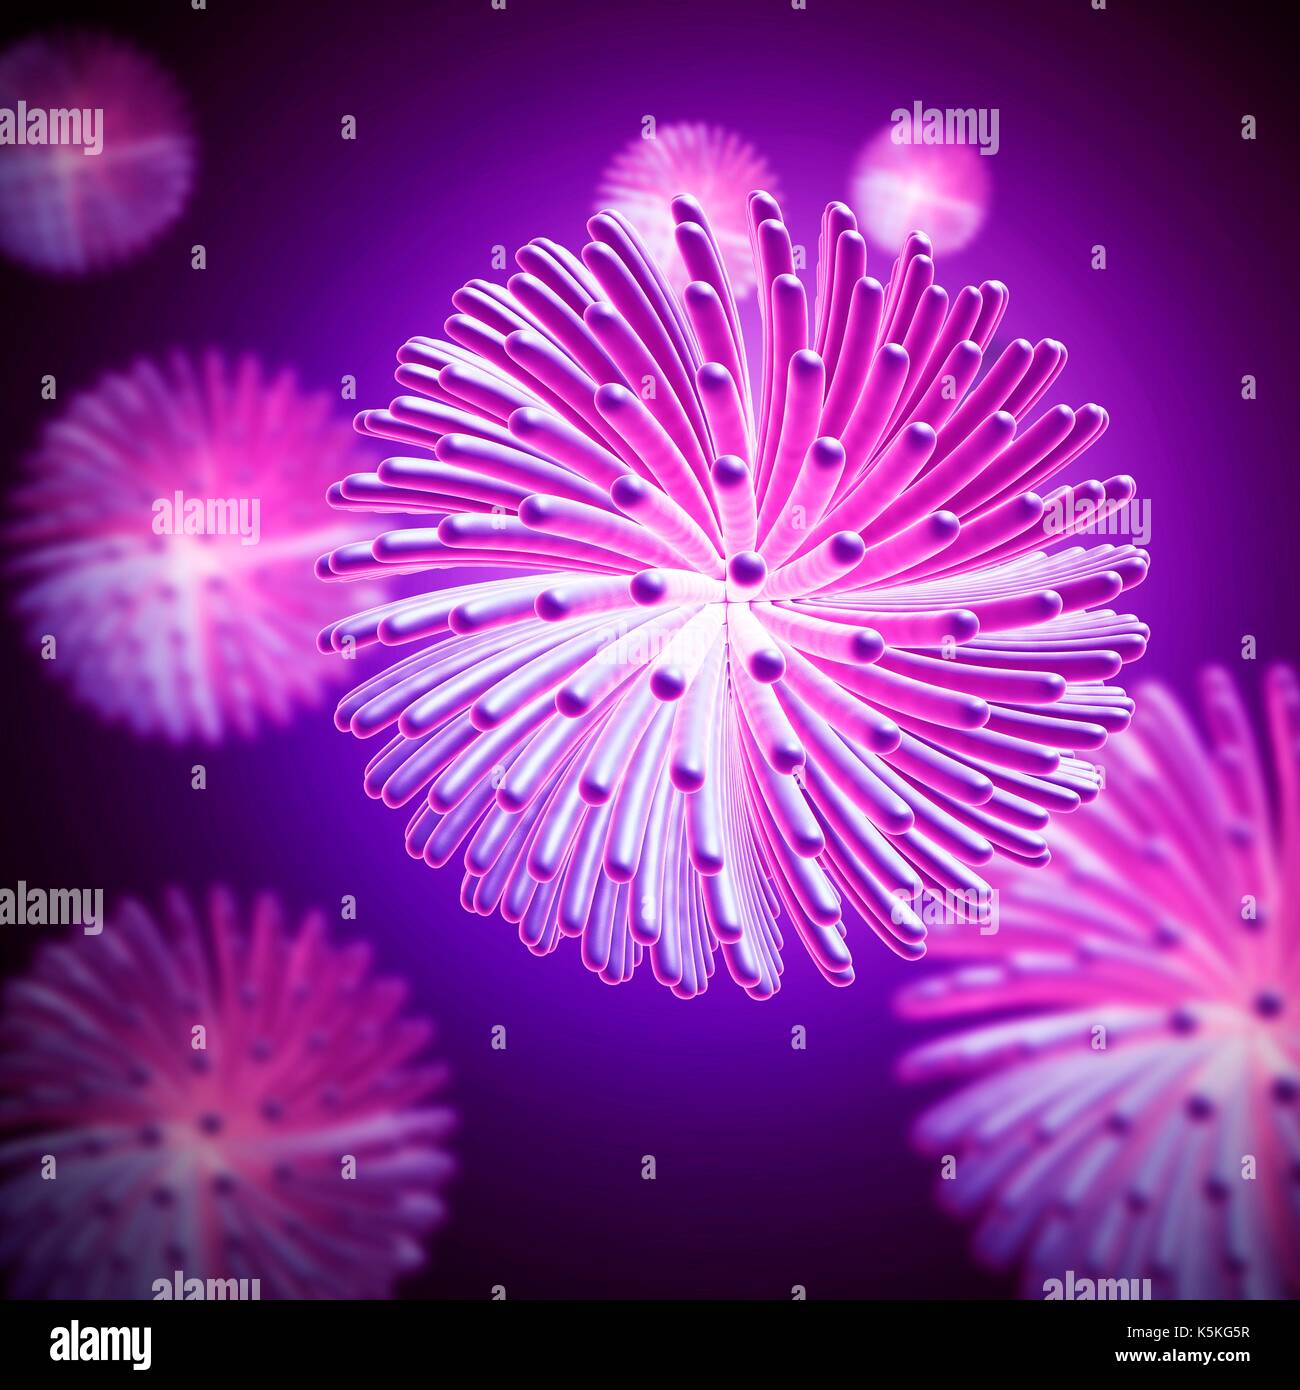 Illustration of retrovirus virus particles. Stock Photo